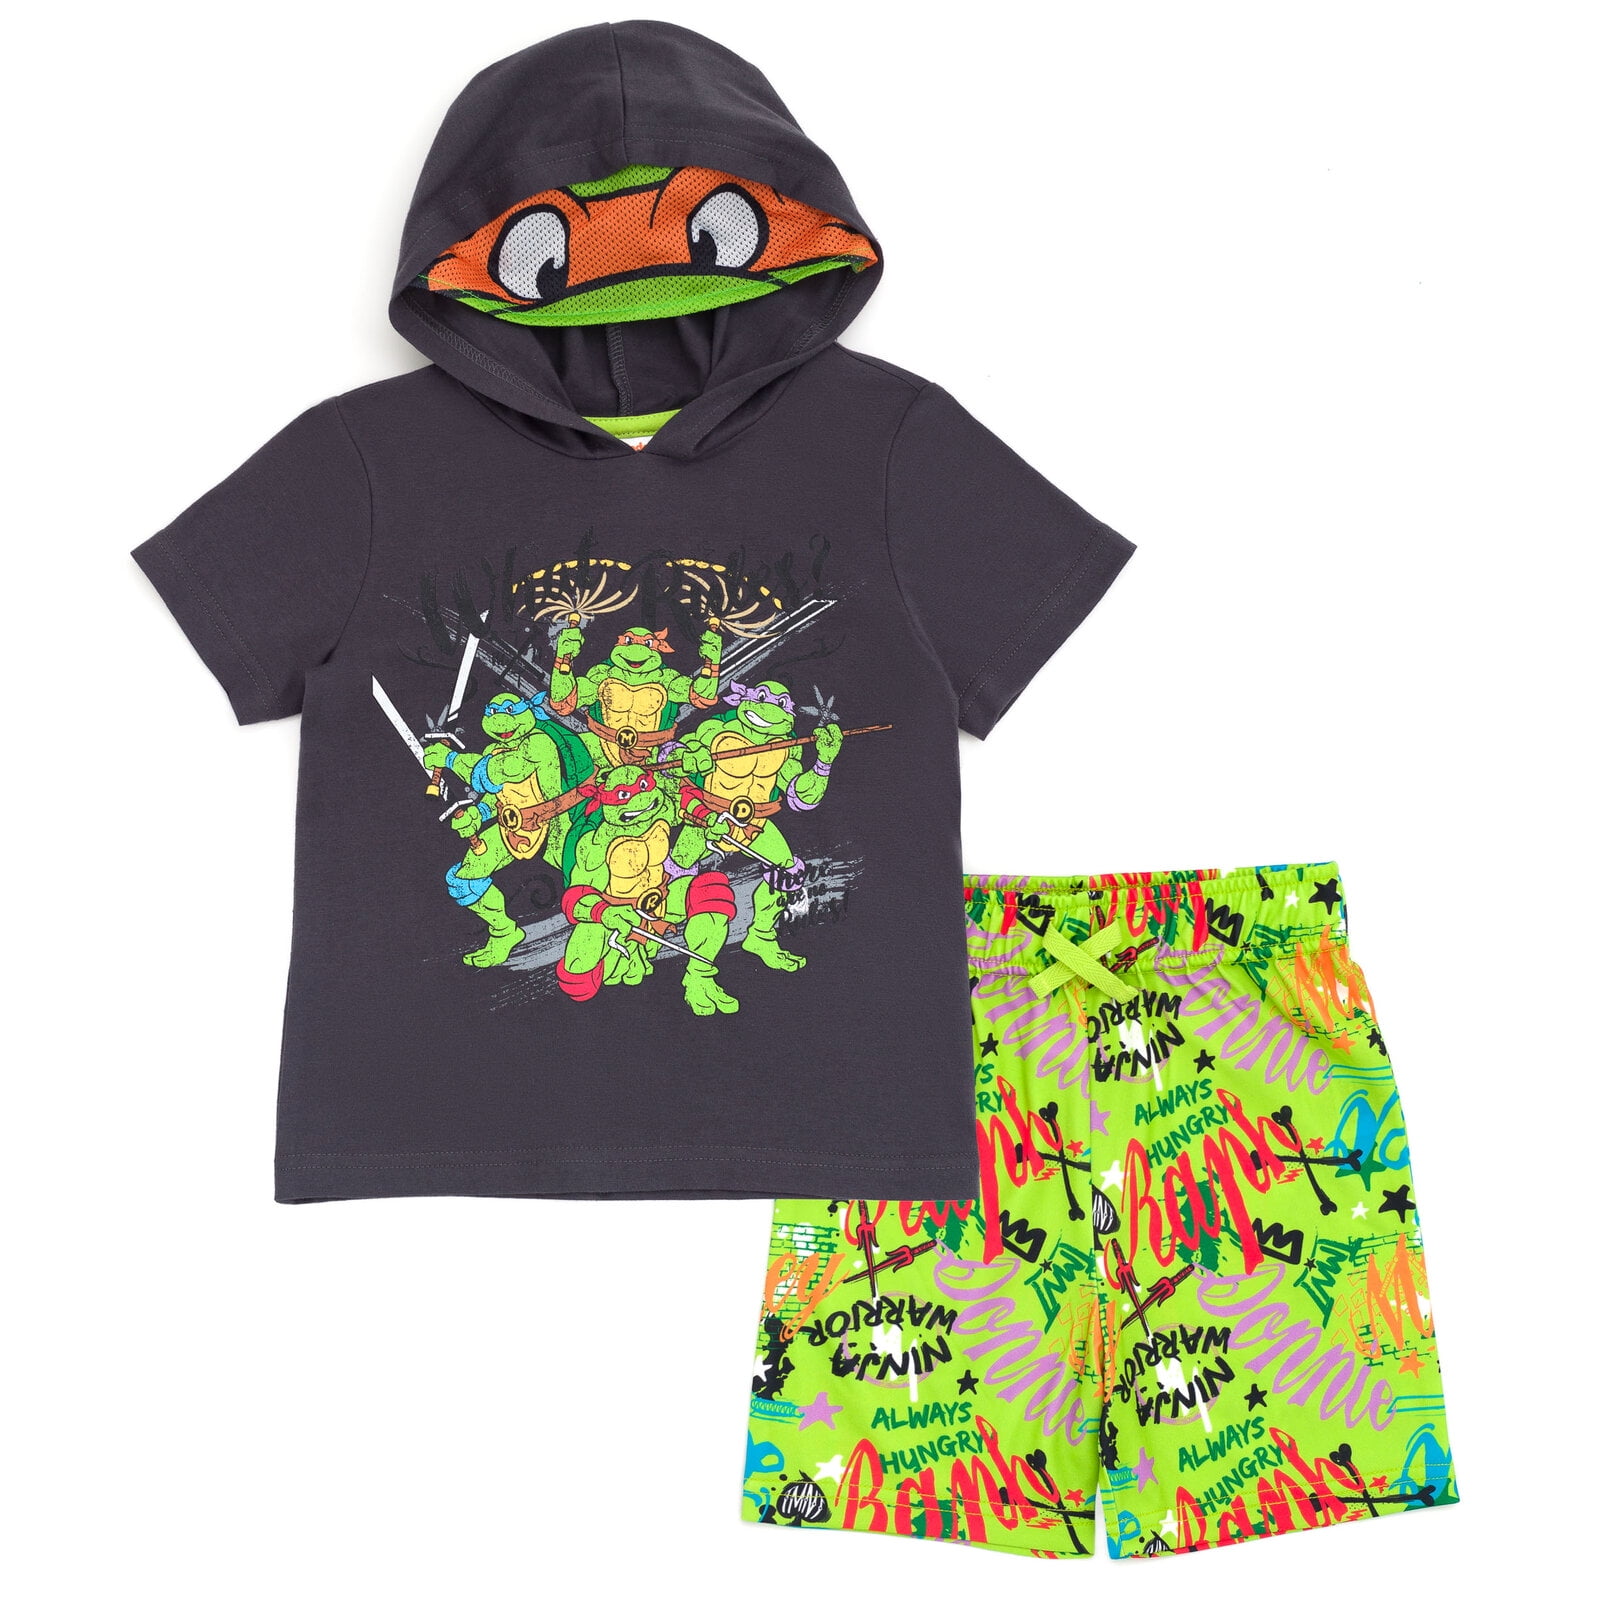 Rise Of Teenage Mutant Ninja Turtles Raph, Mikey, Leo, Donnie Boy's Fleece  Pajama Set - Little Dreamers Pajamas